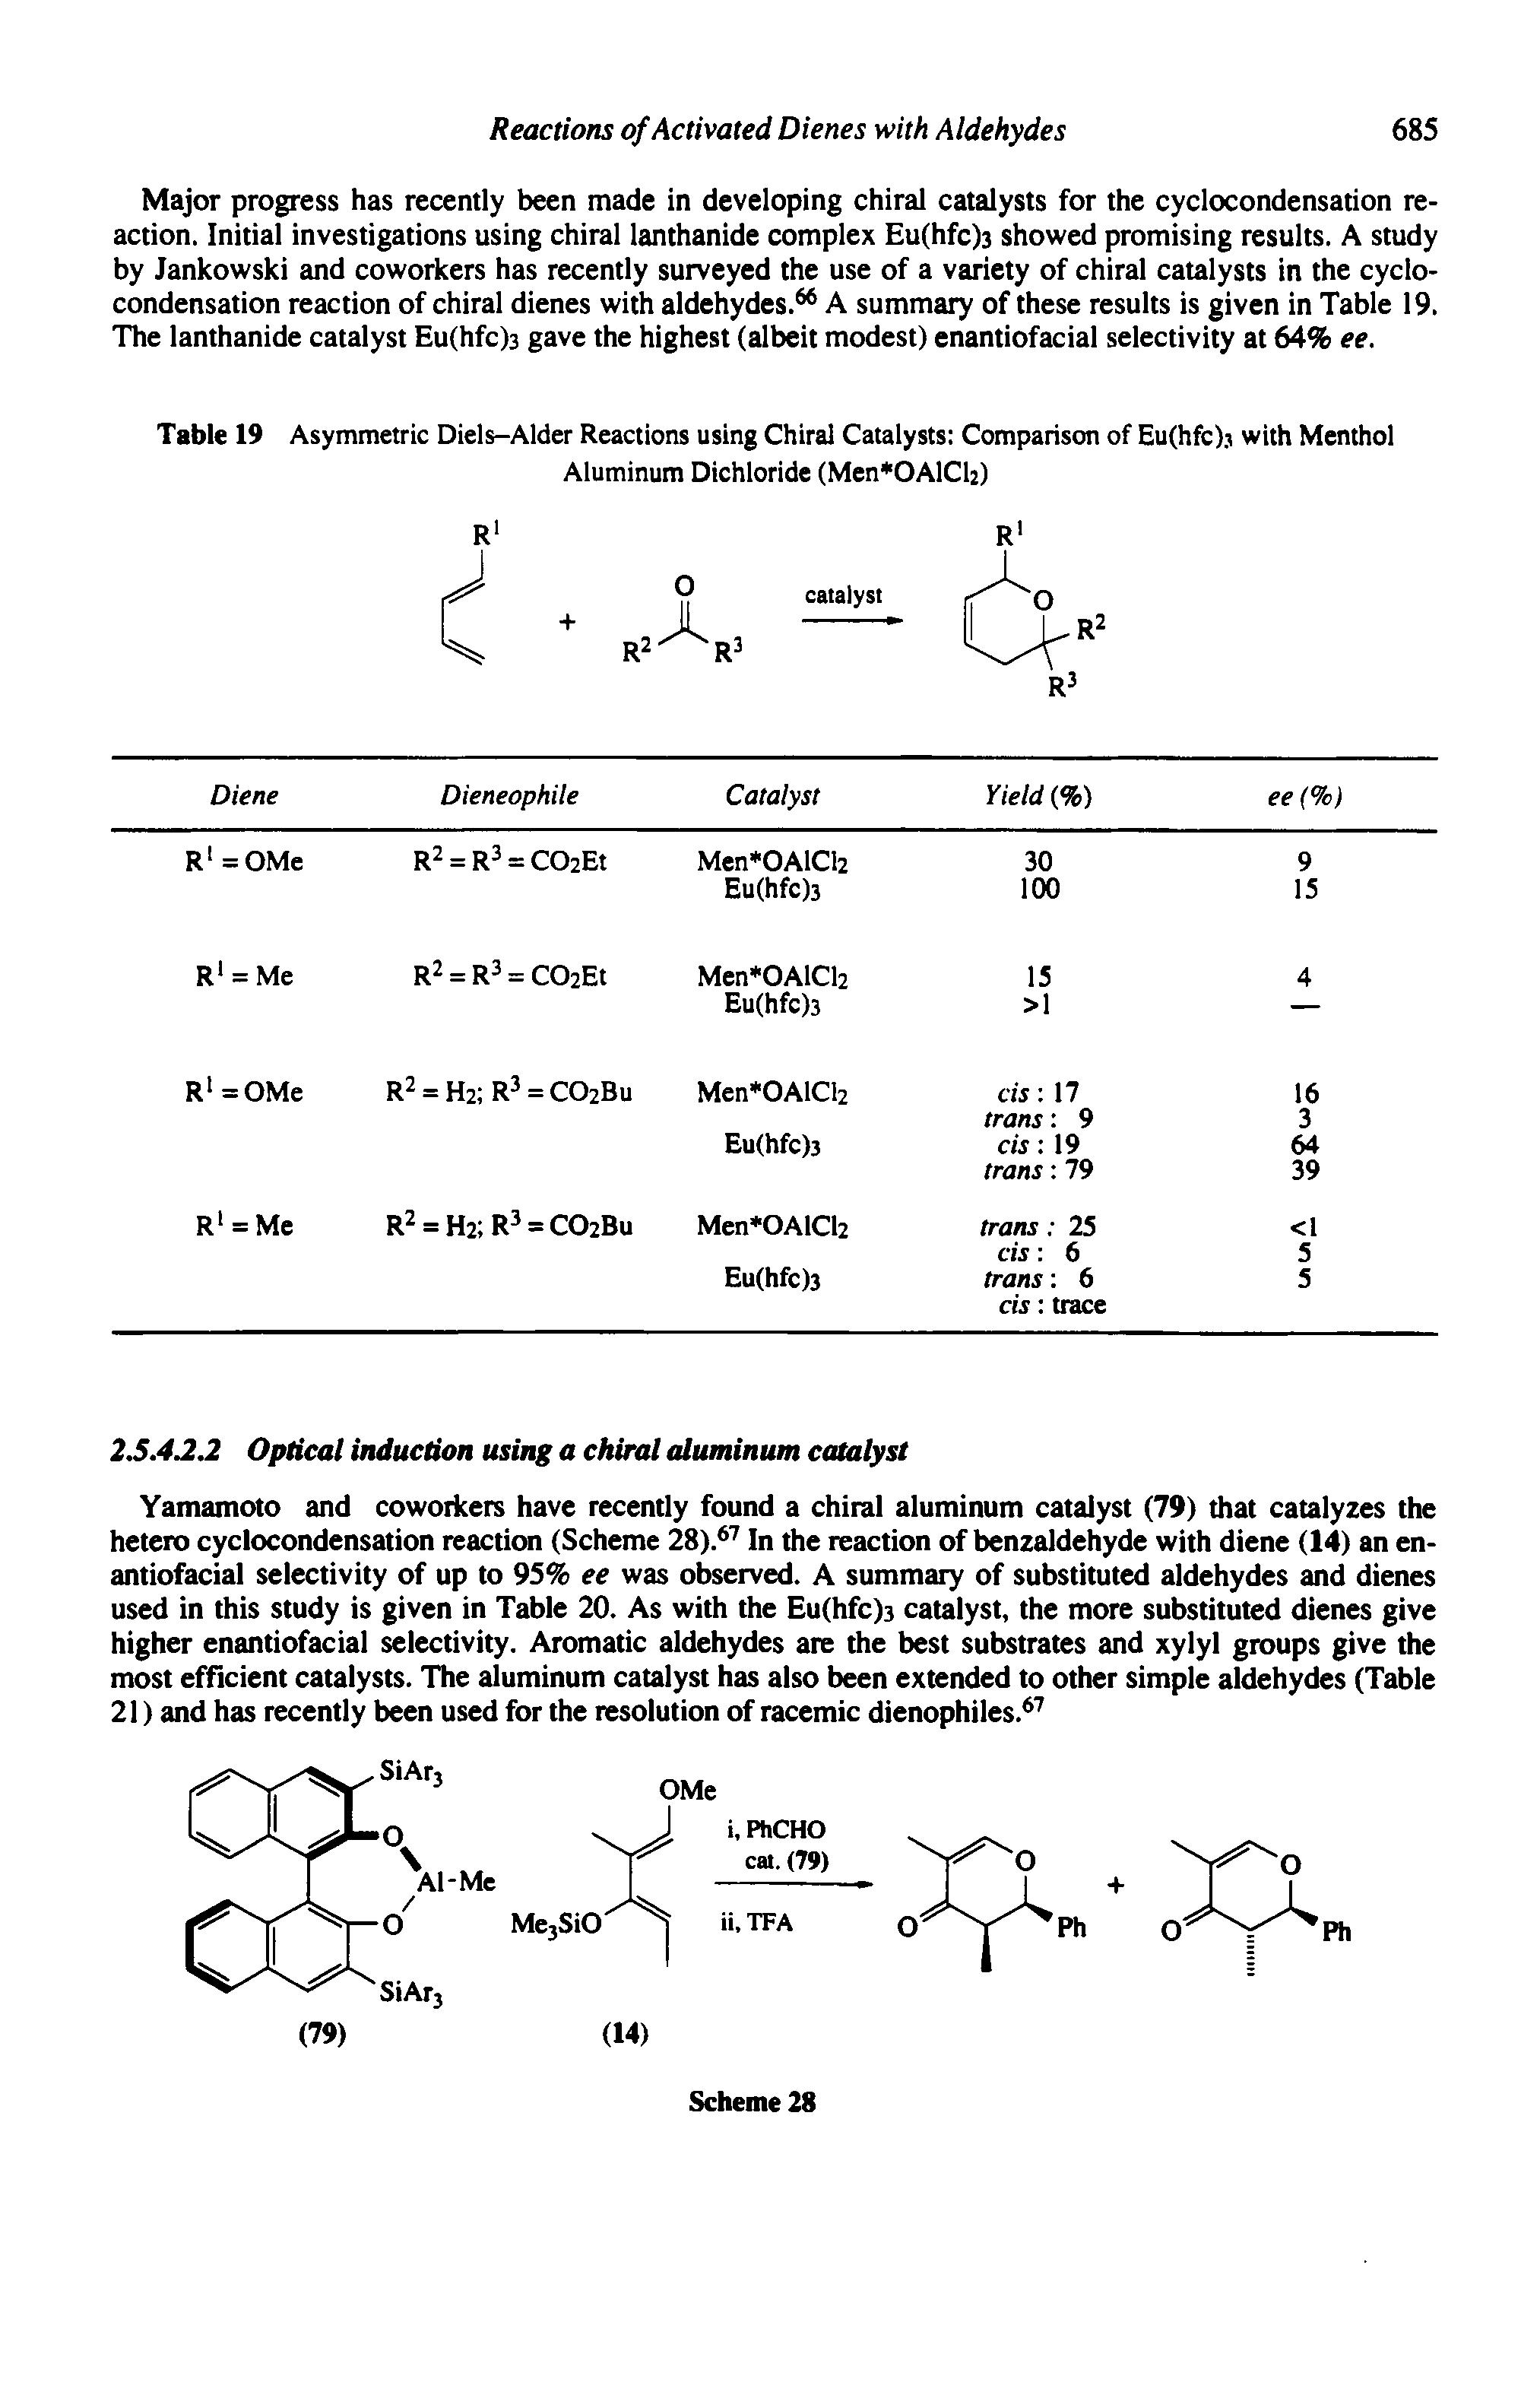 Table 19 Asymmetric Diels-Alder Reactions using Chiral Catalysts Comparison of Eu(hfc)j with Menthol...